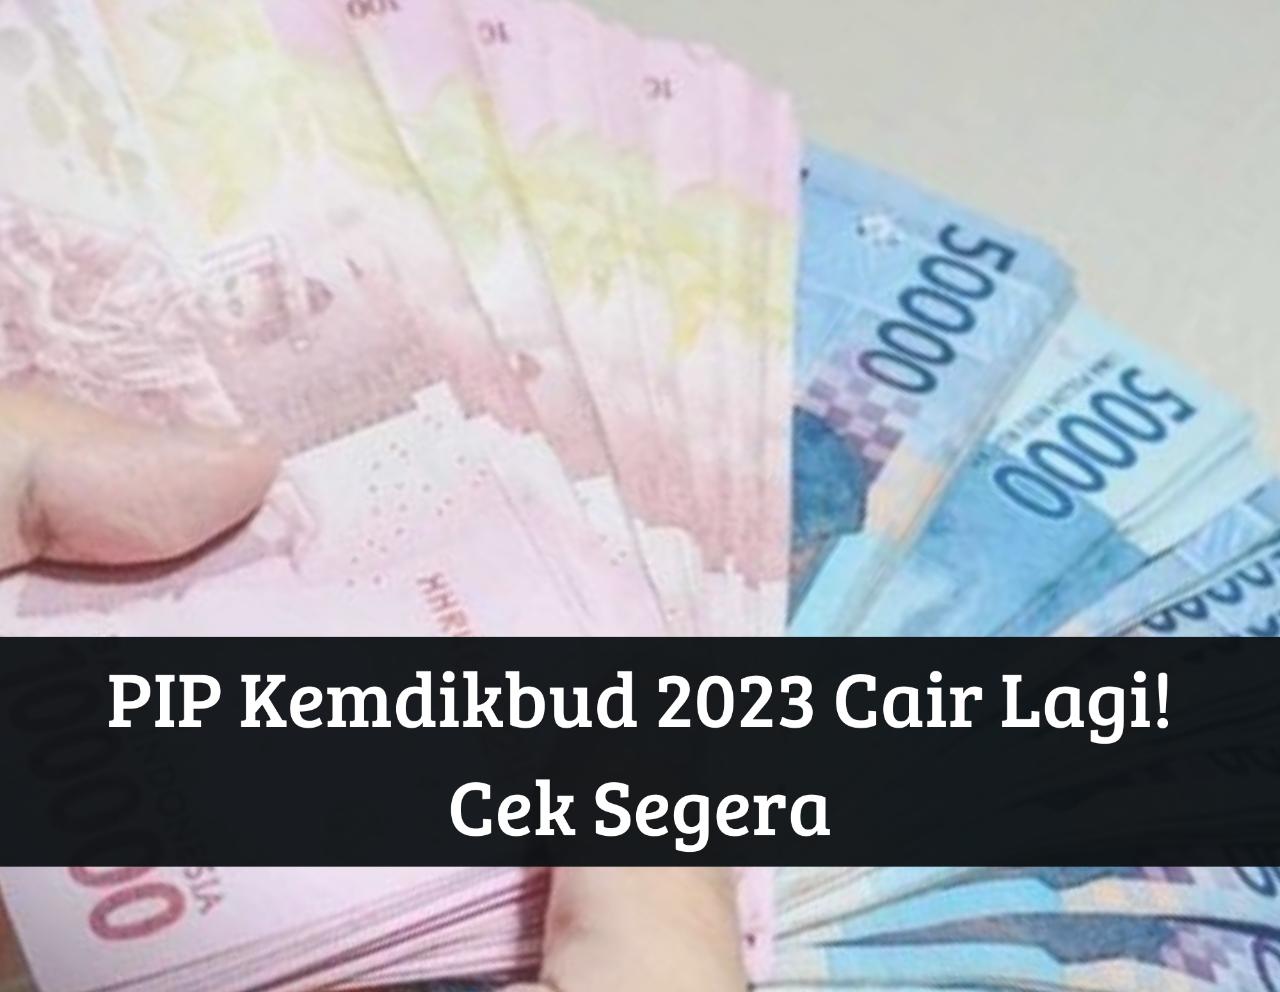 Bansos PIP Kemdikbud 2023 Cair Lagi September, Login Pakai NIK NISN di pip.kemdikbud.go.id Segera